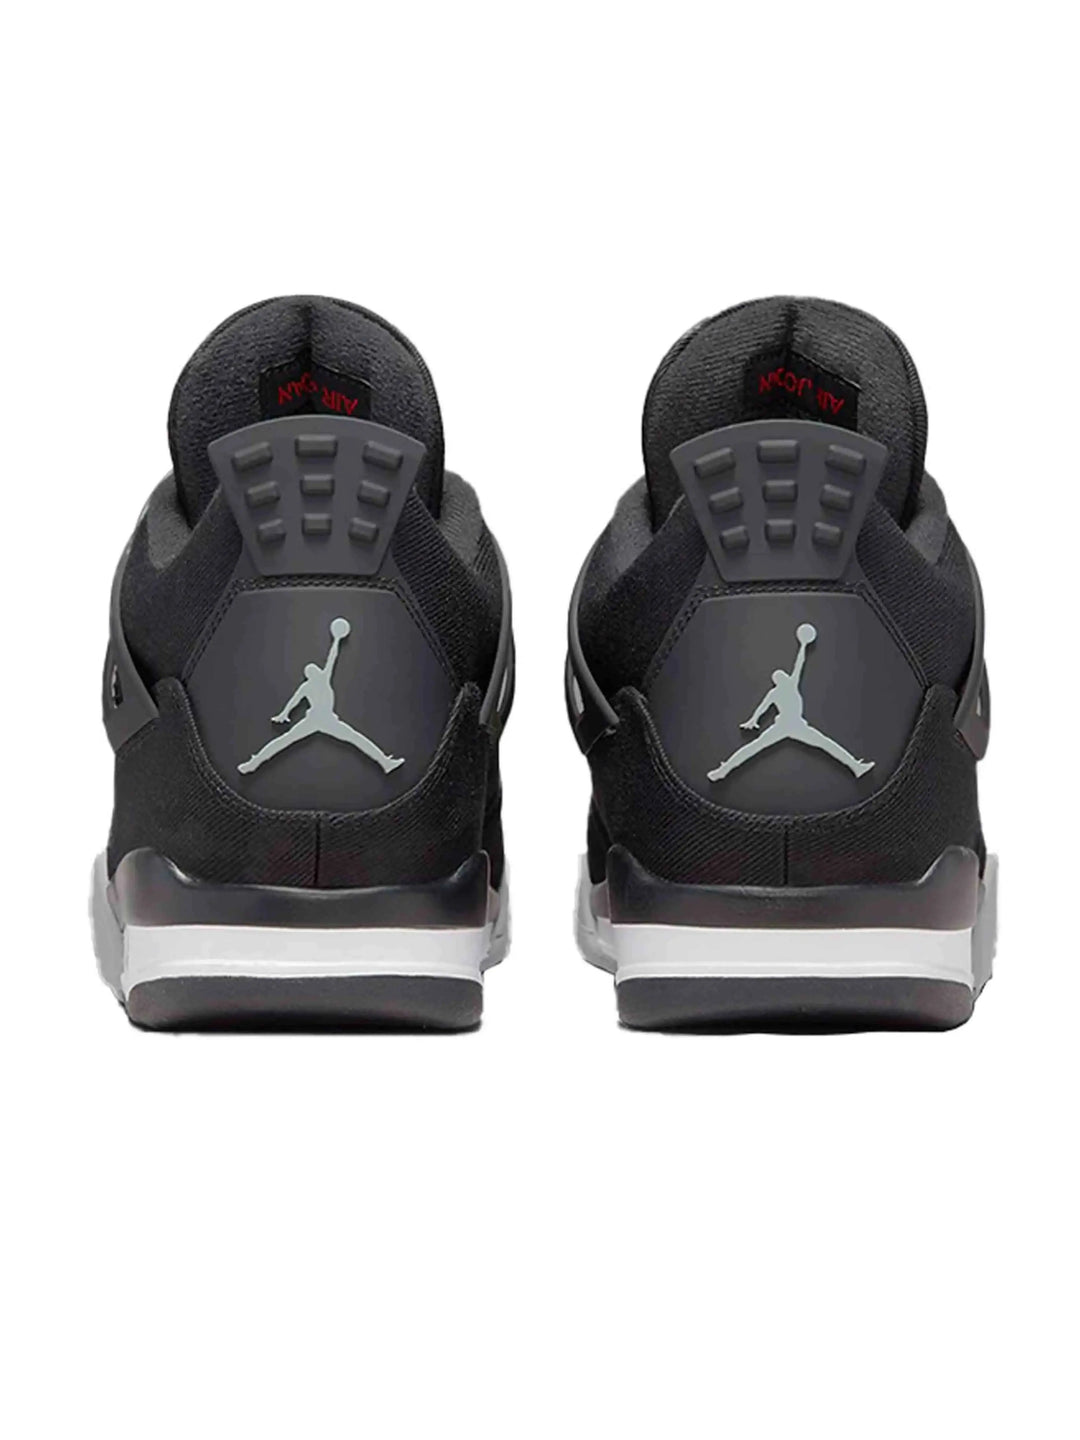 Nike Air Jordan 4 Retro SE Black Canvas - Prior